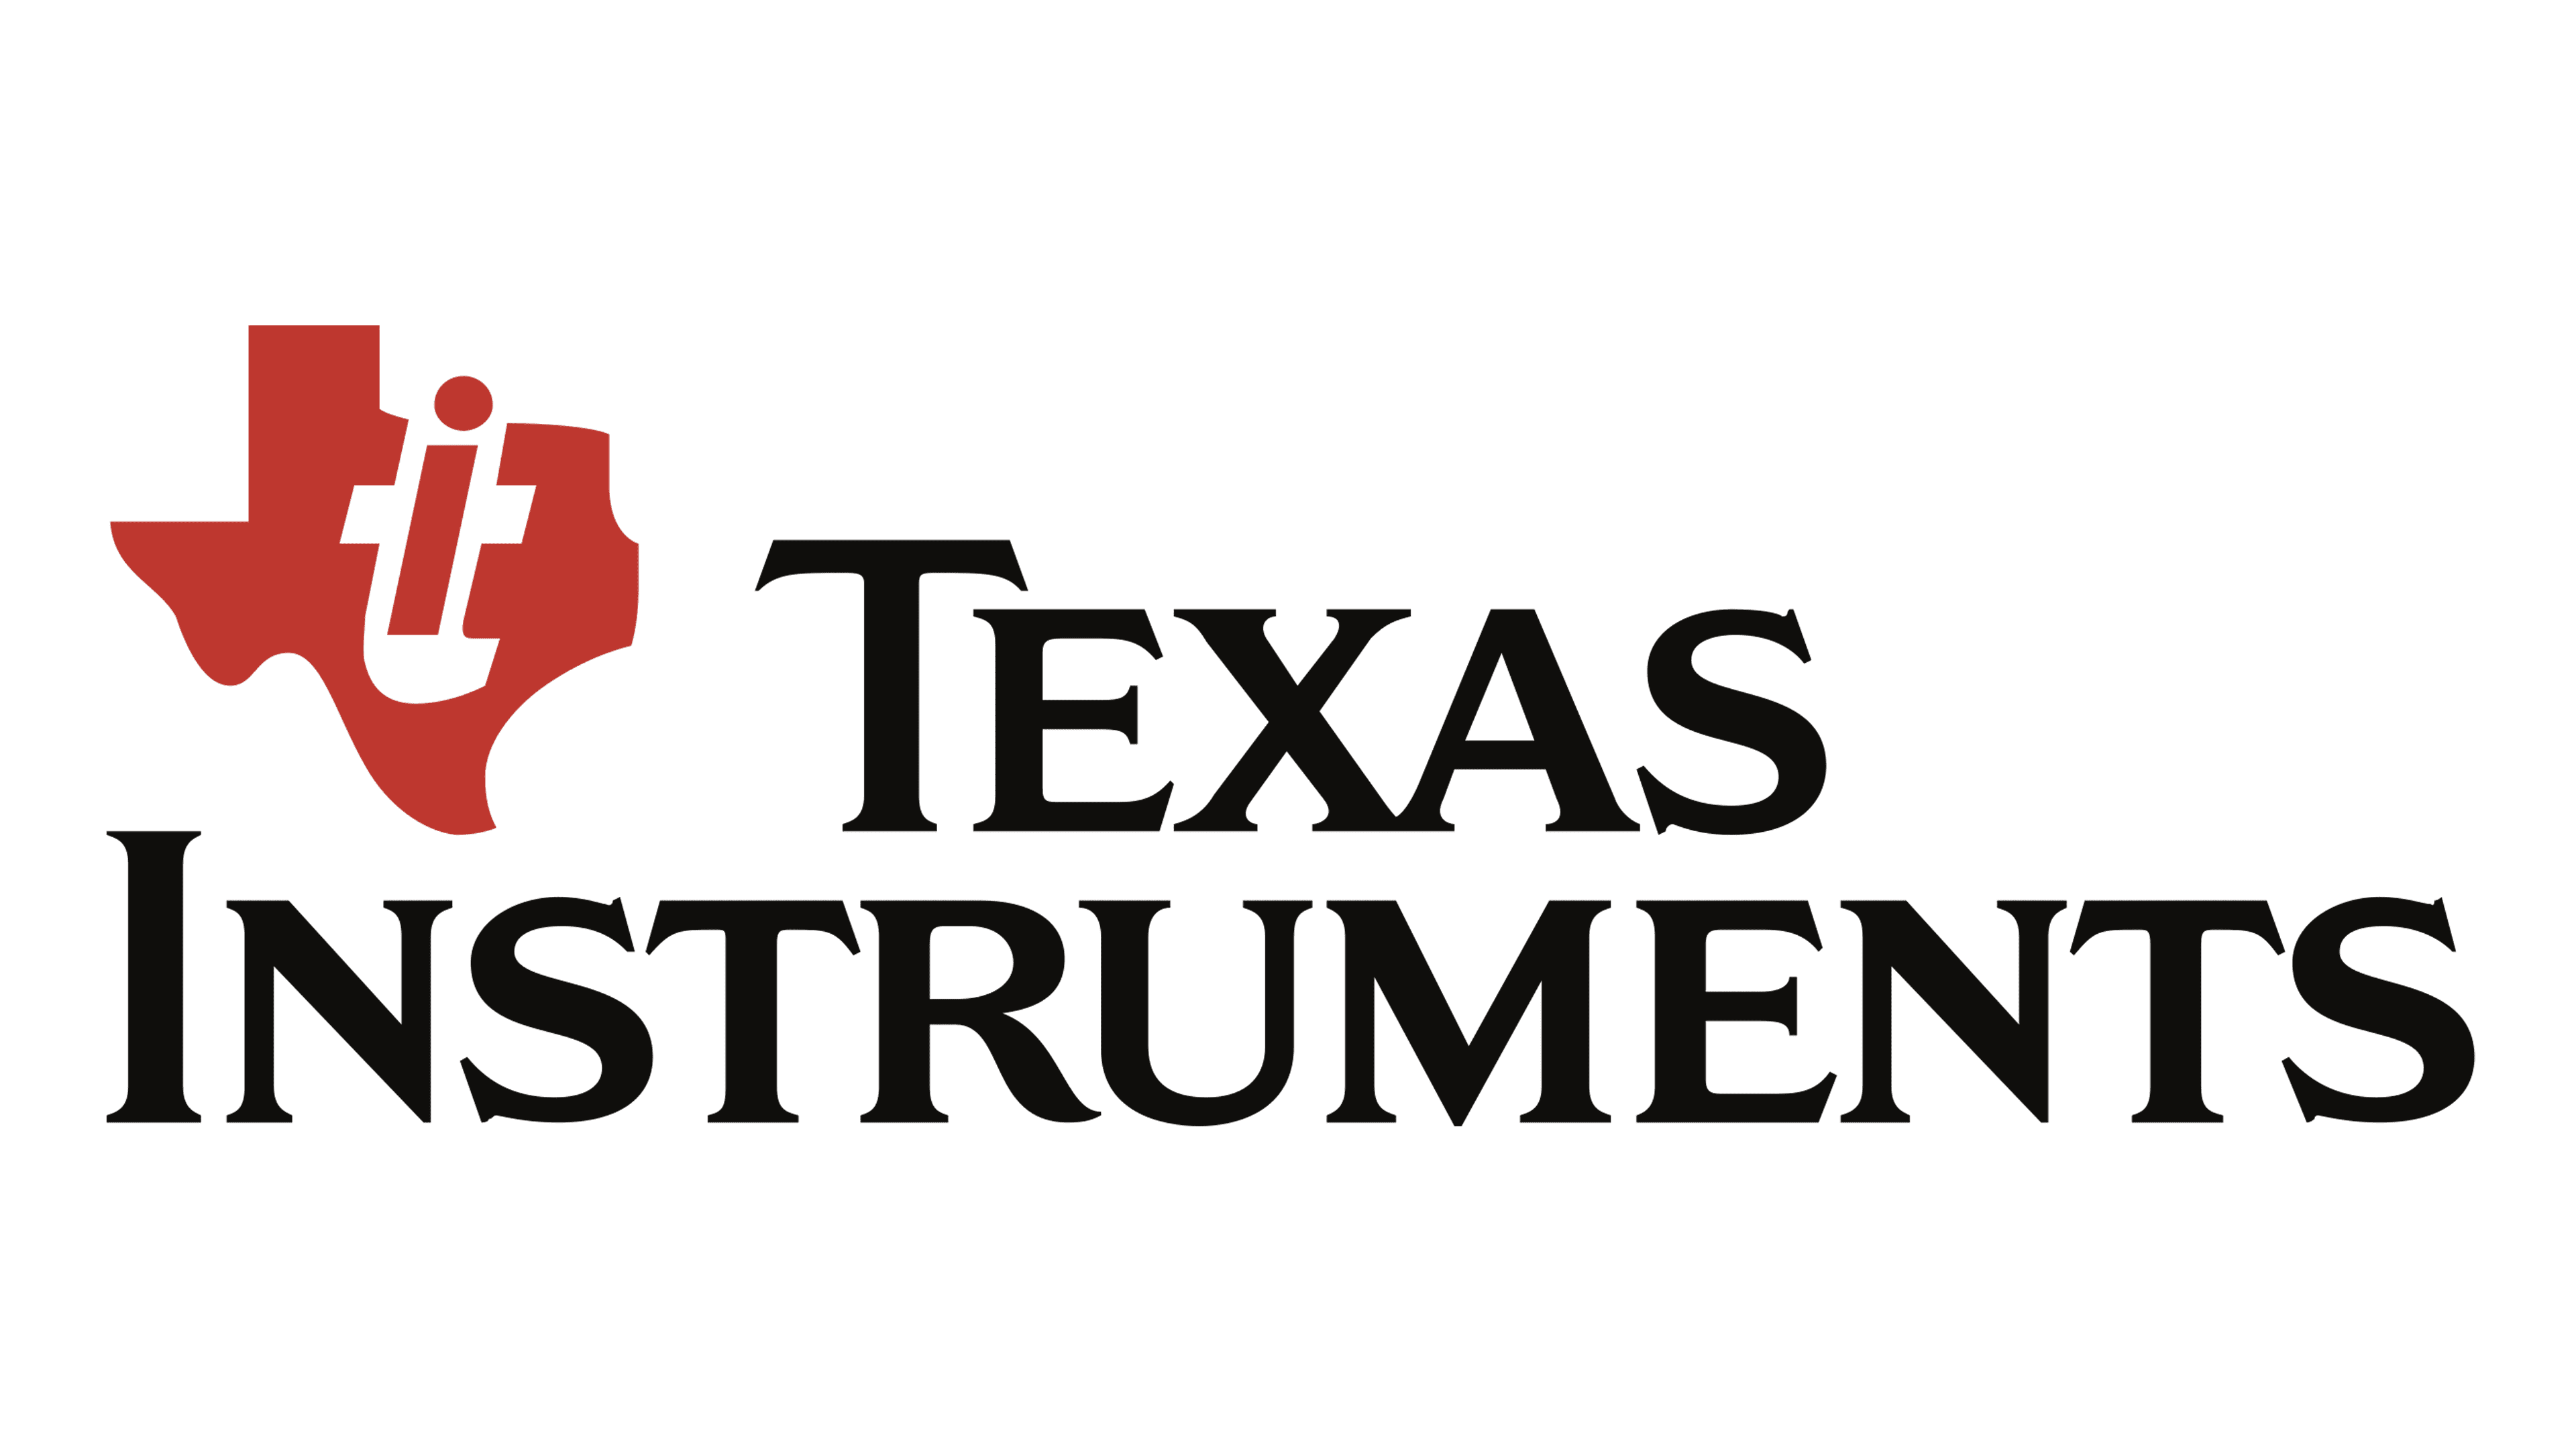 Texas-Instruments-logo